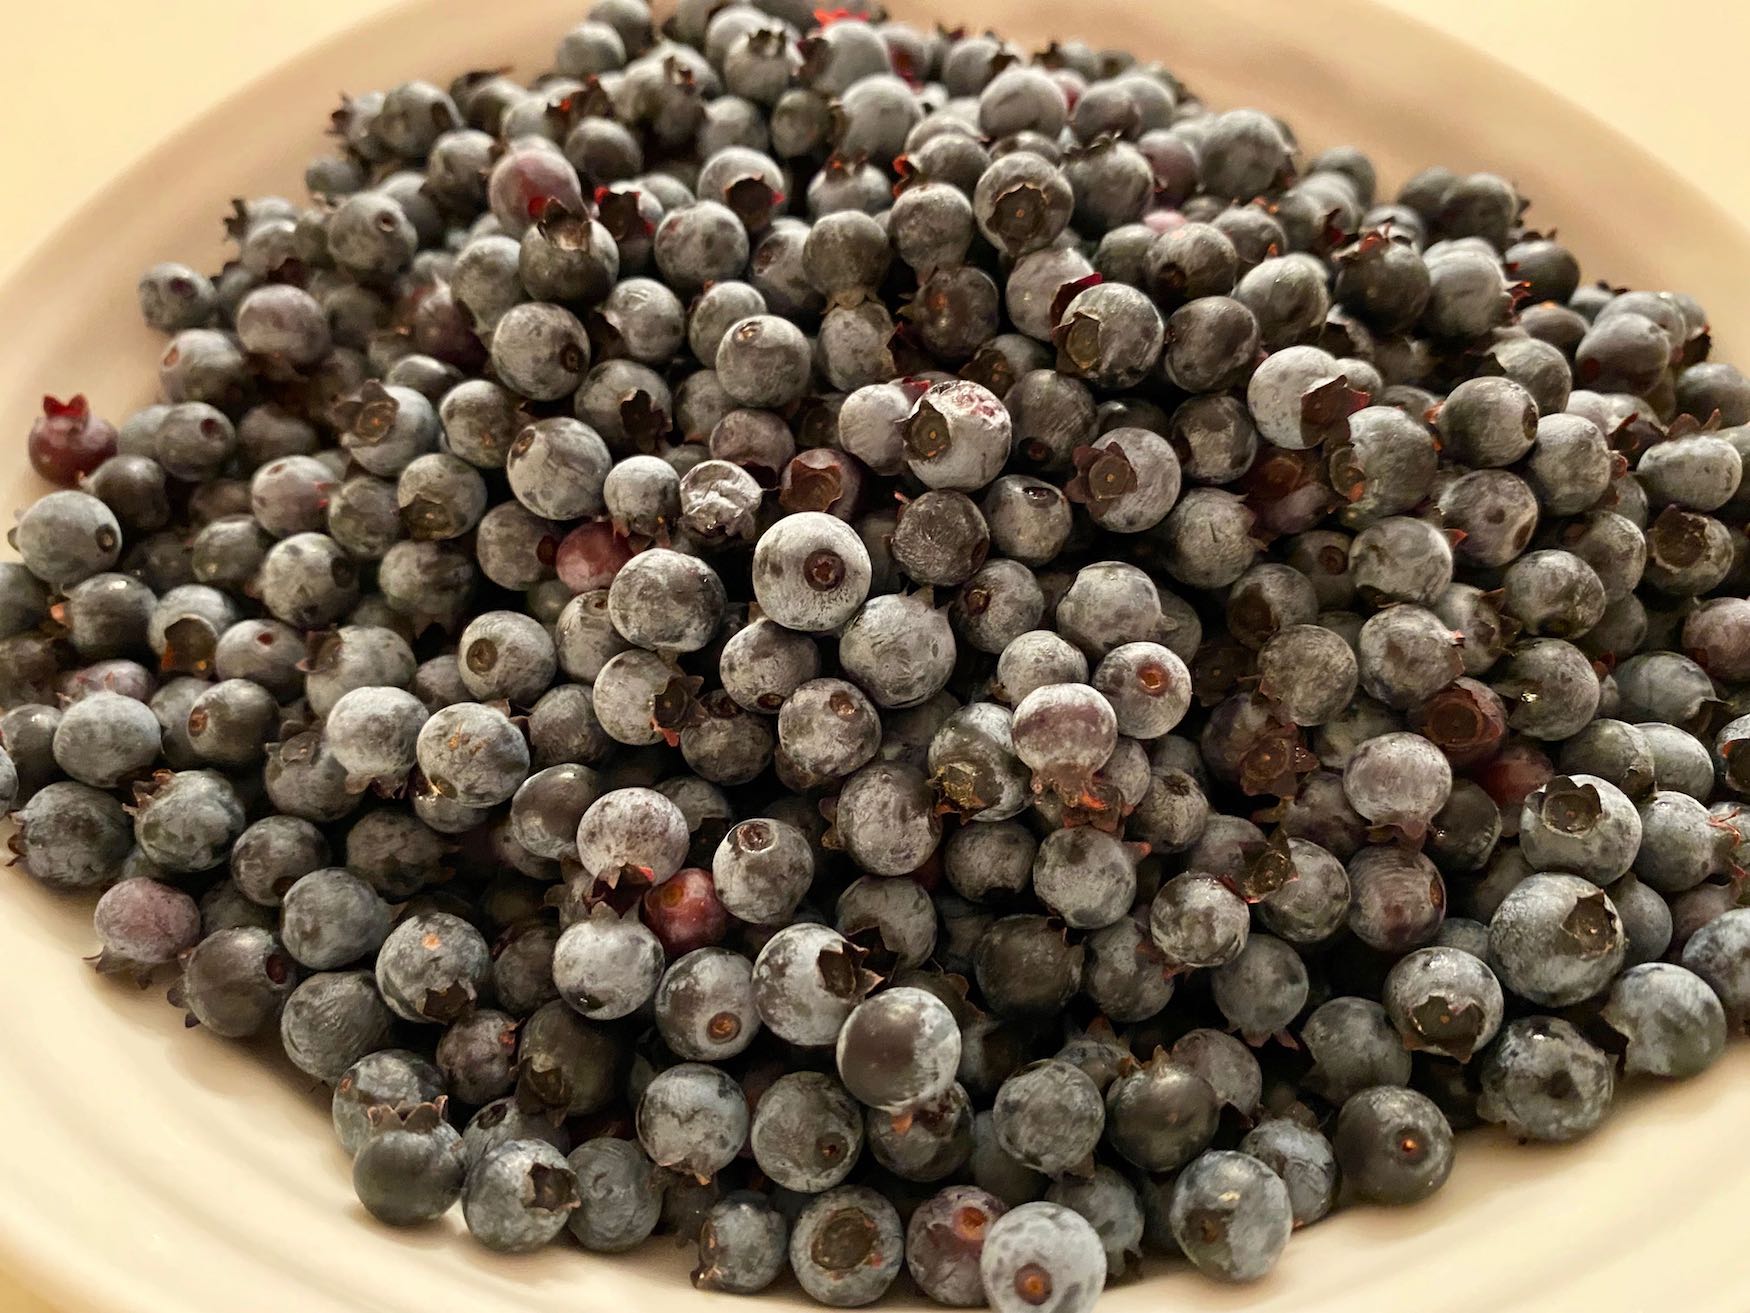 It's the weekend! Number 257, Bowl of Freshly Picked Wild Blueberries